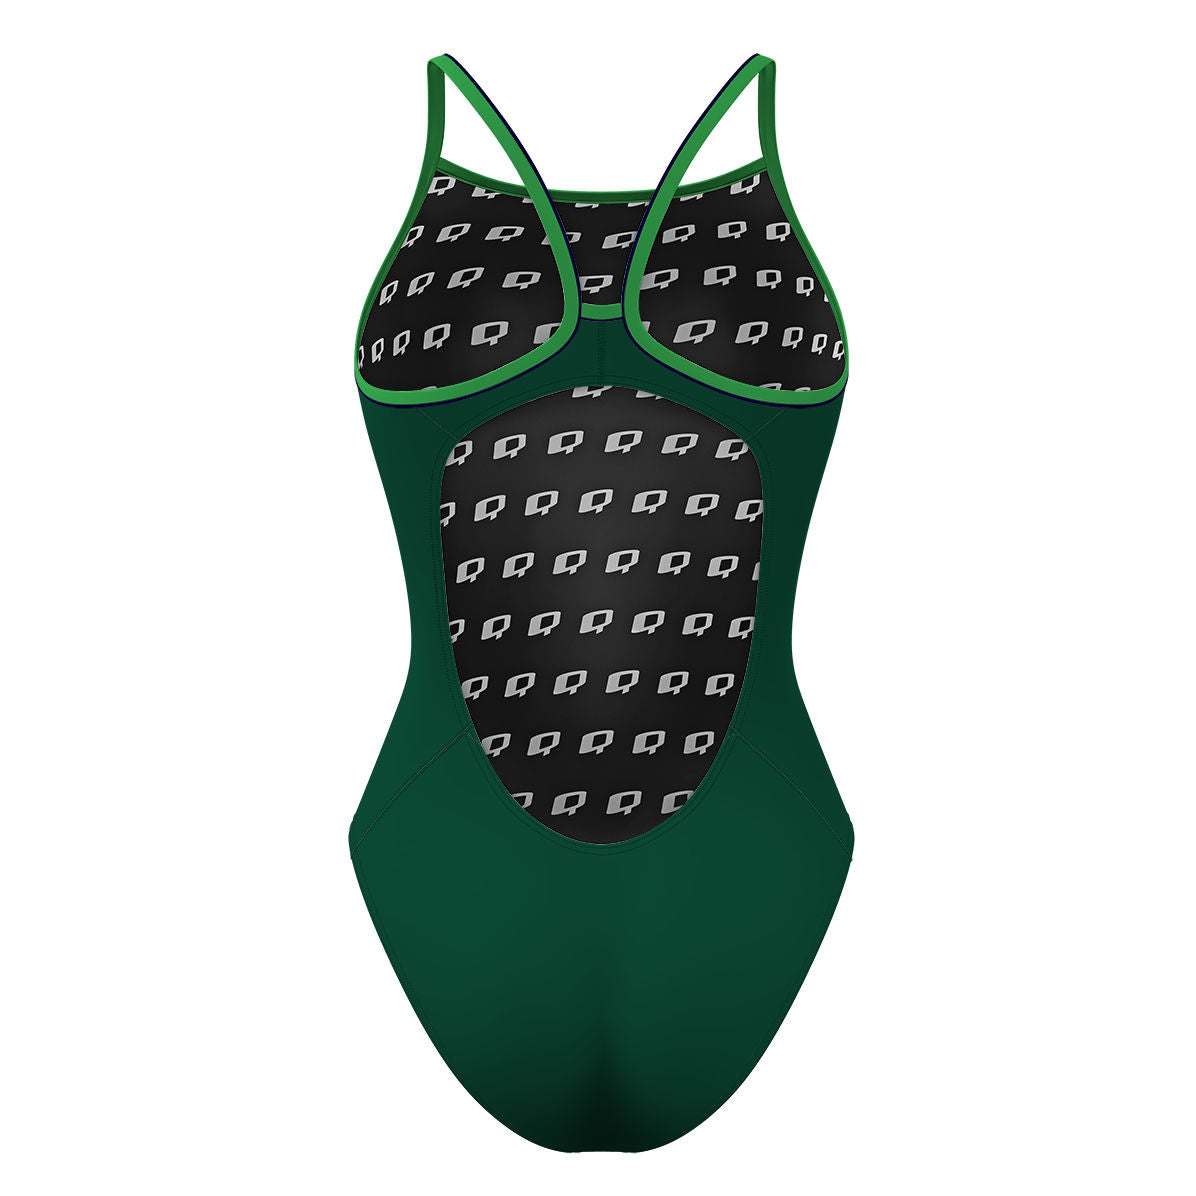 Green - Skinny Strap Swimsuit